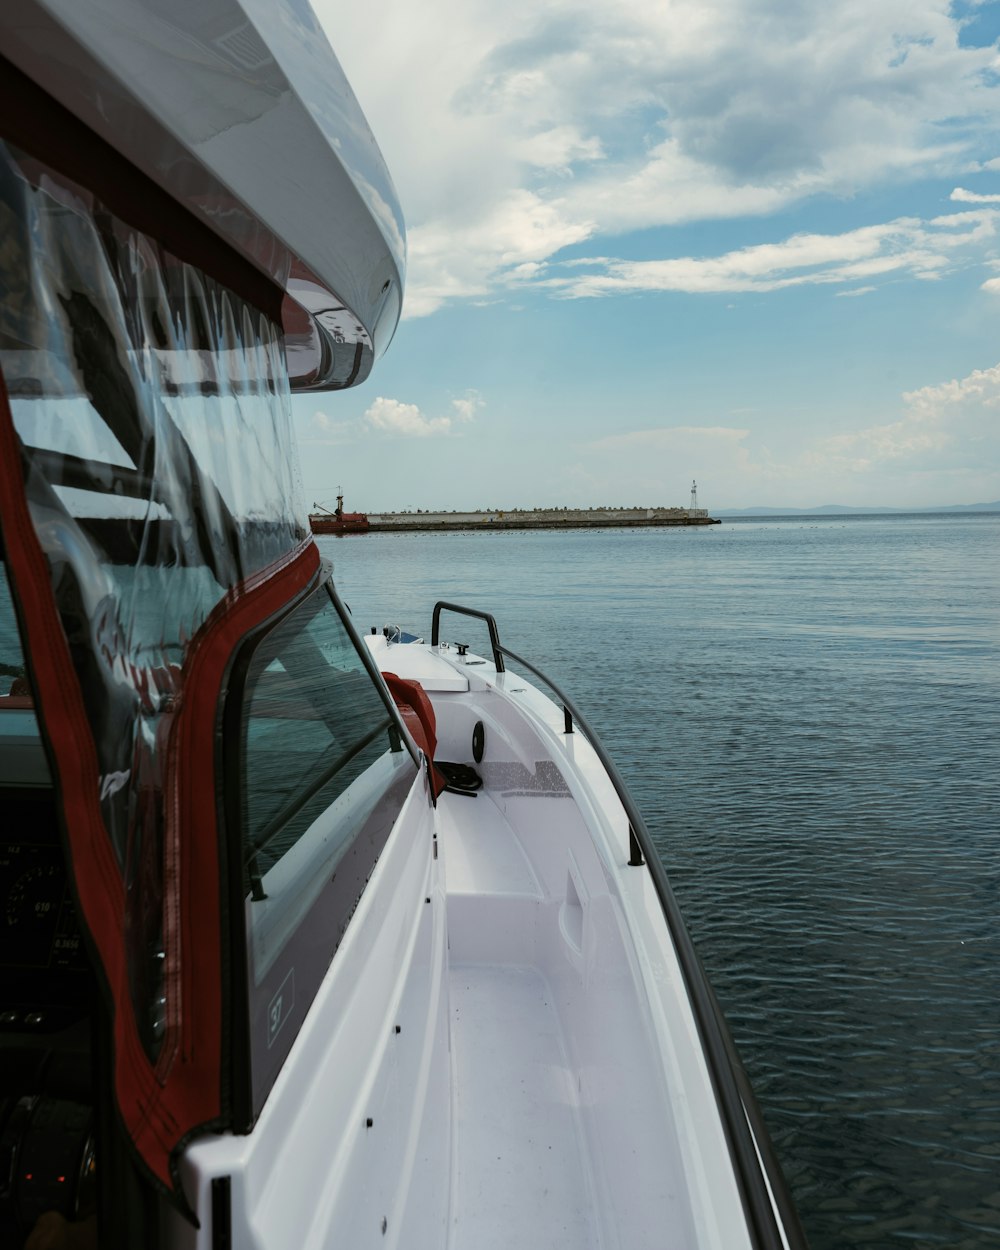 barco branco e preto no mar durante o dia